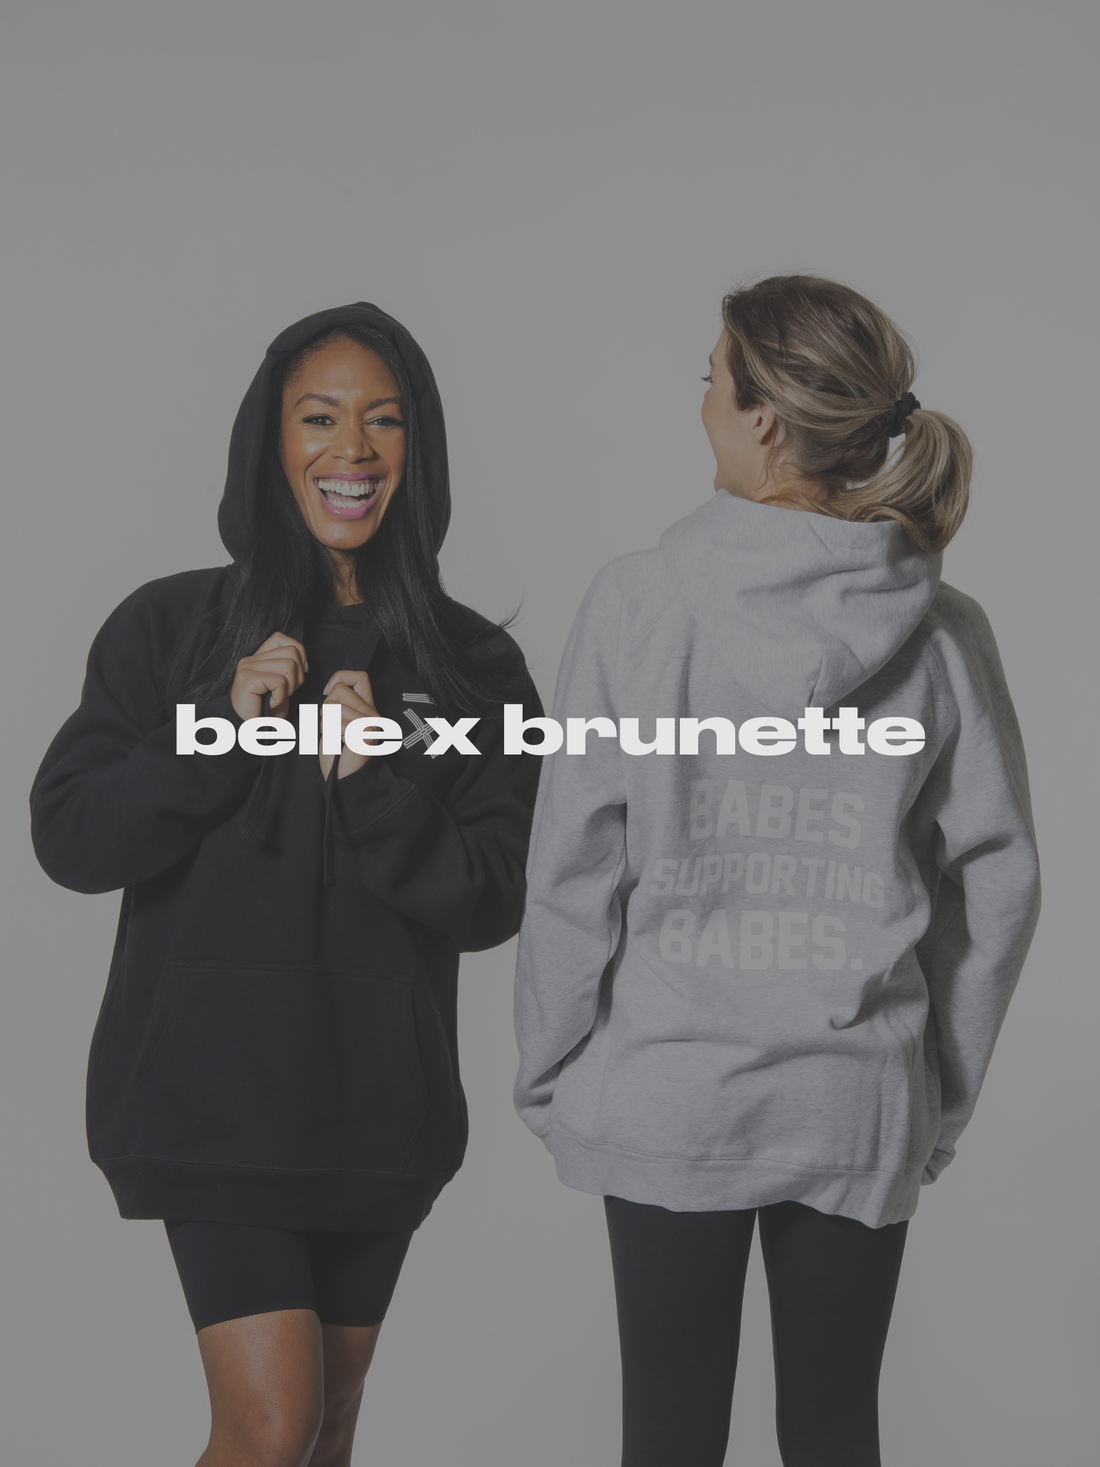  Belle x Brunette The Label